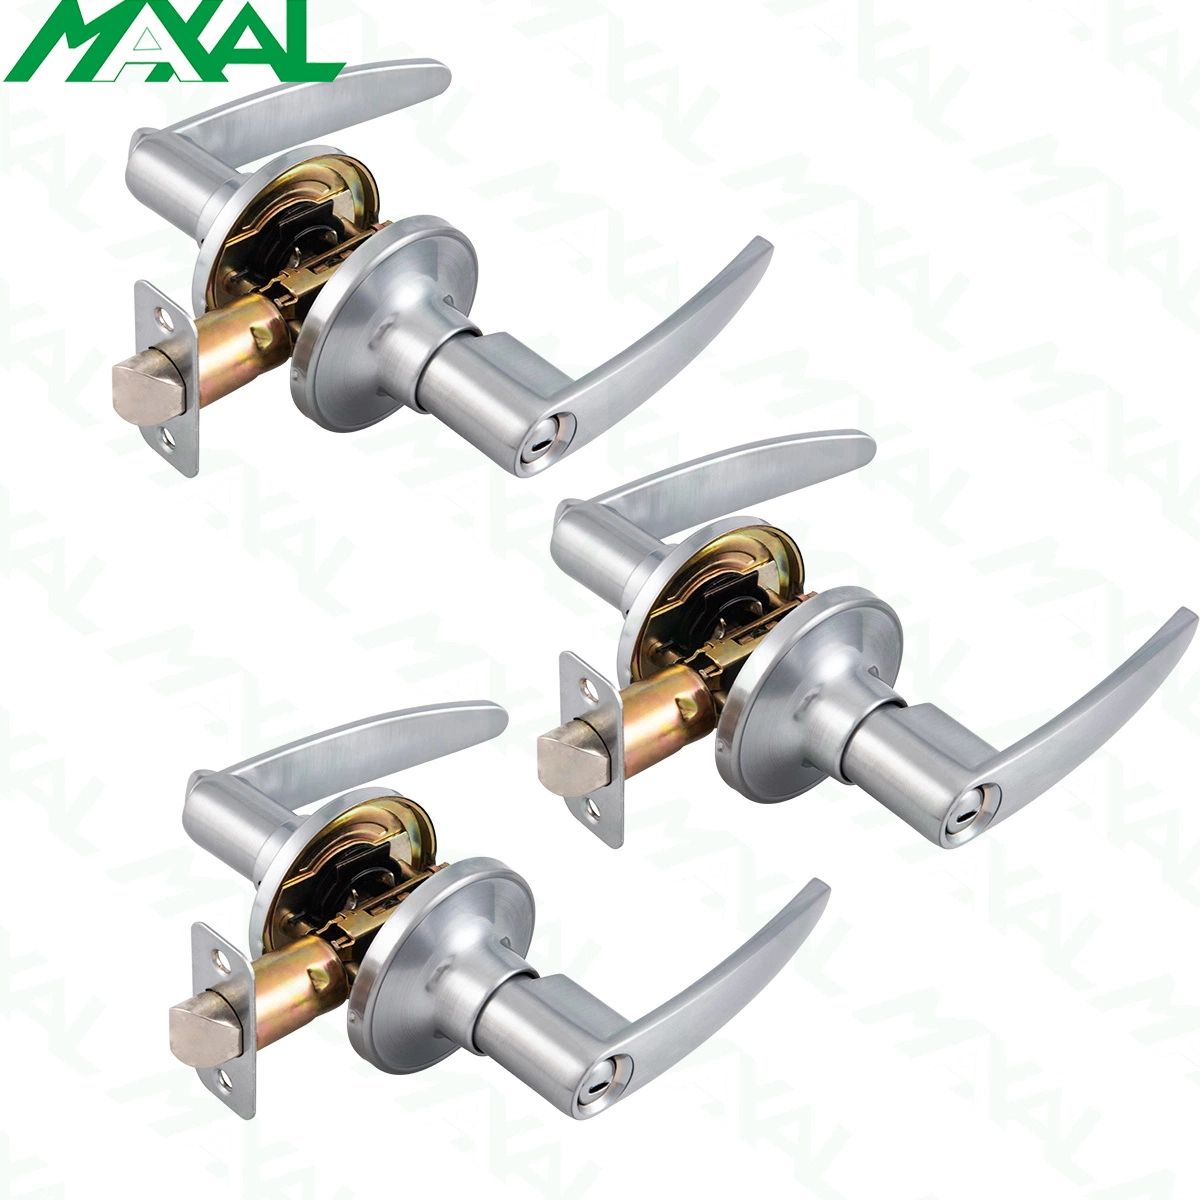 Maxal Aluminium Alloy Straight Lever Handle, Tubular Leverset, Privacy Function Door Lock